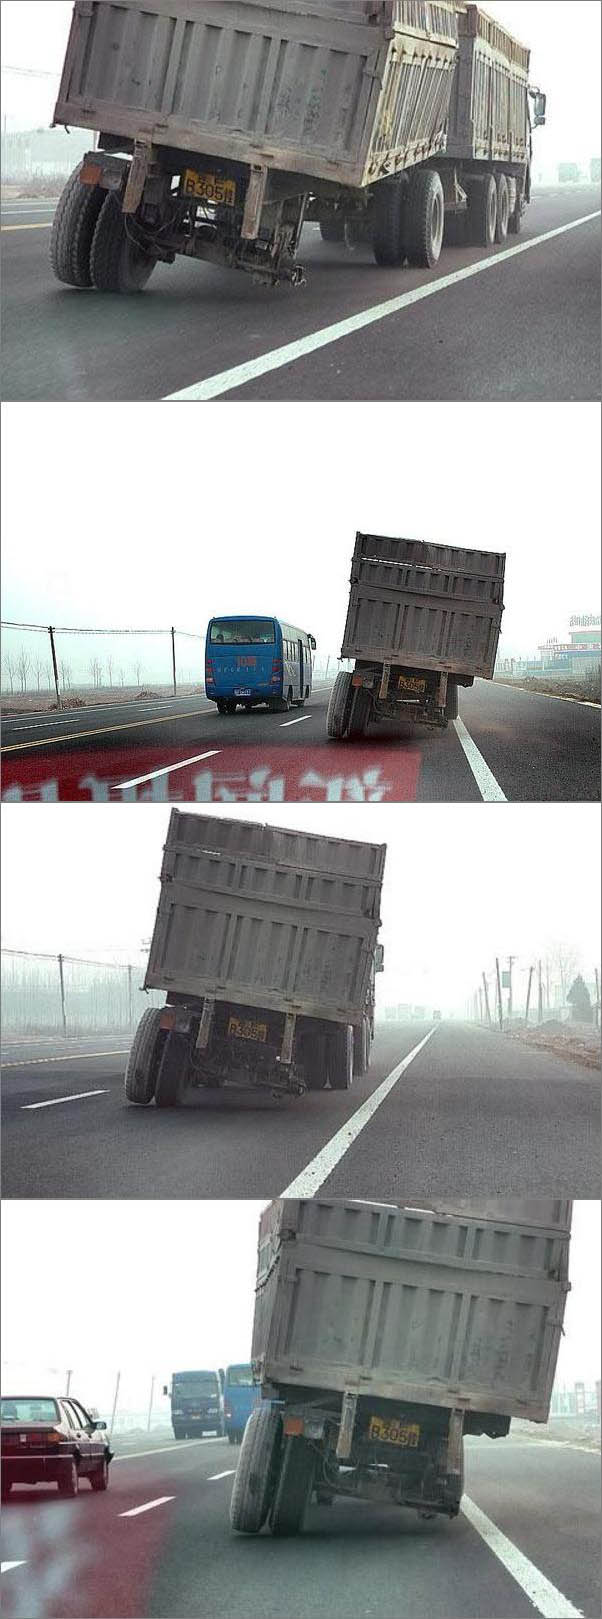 highway safety